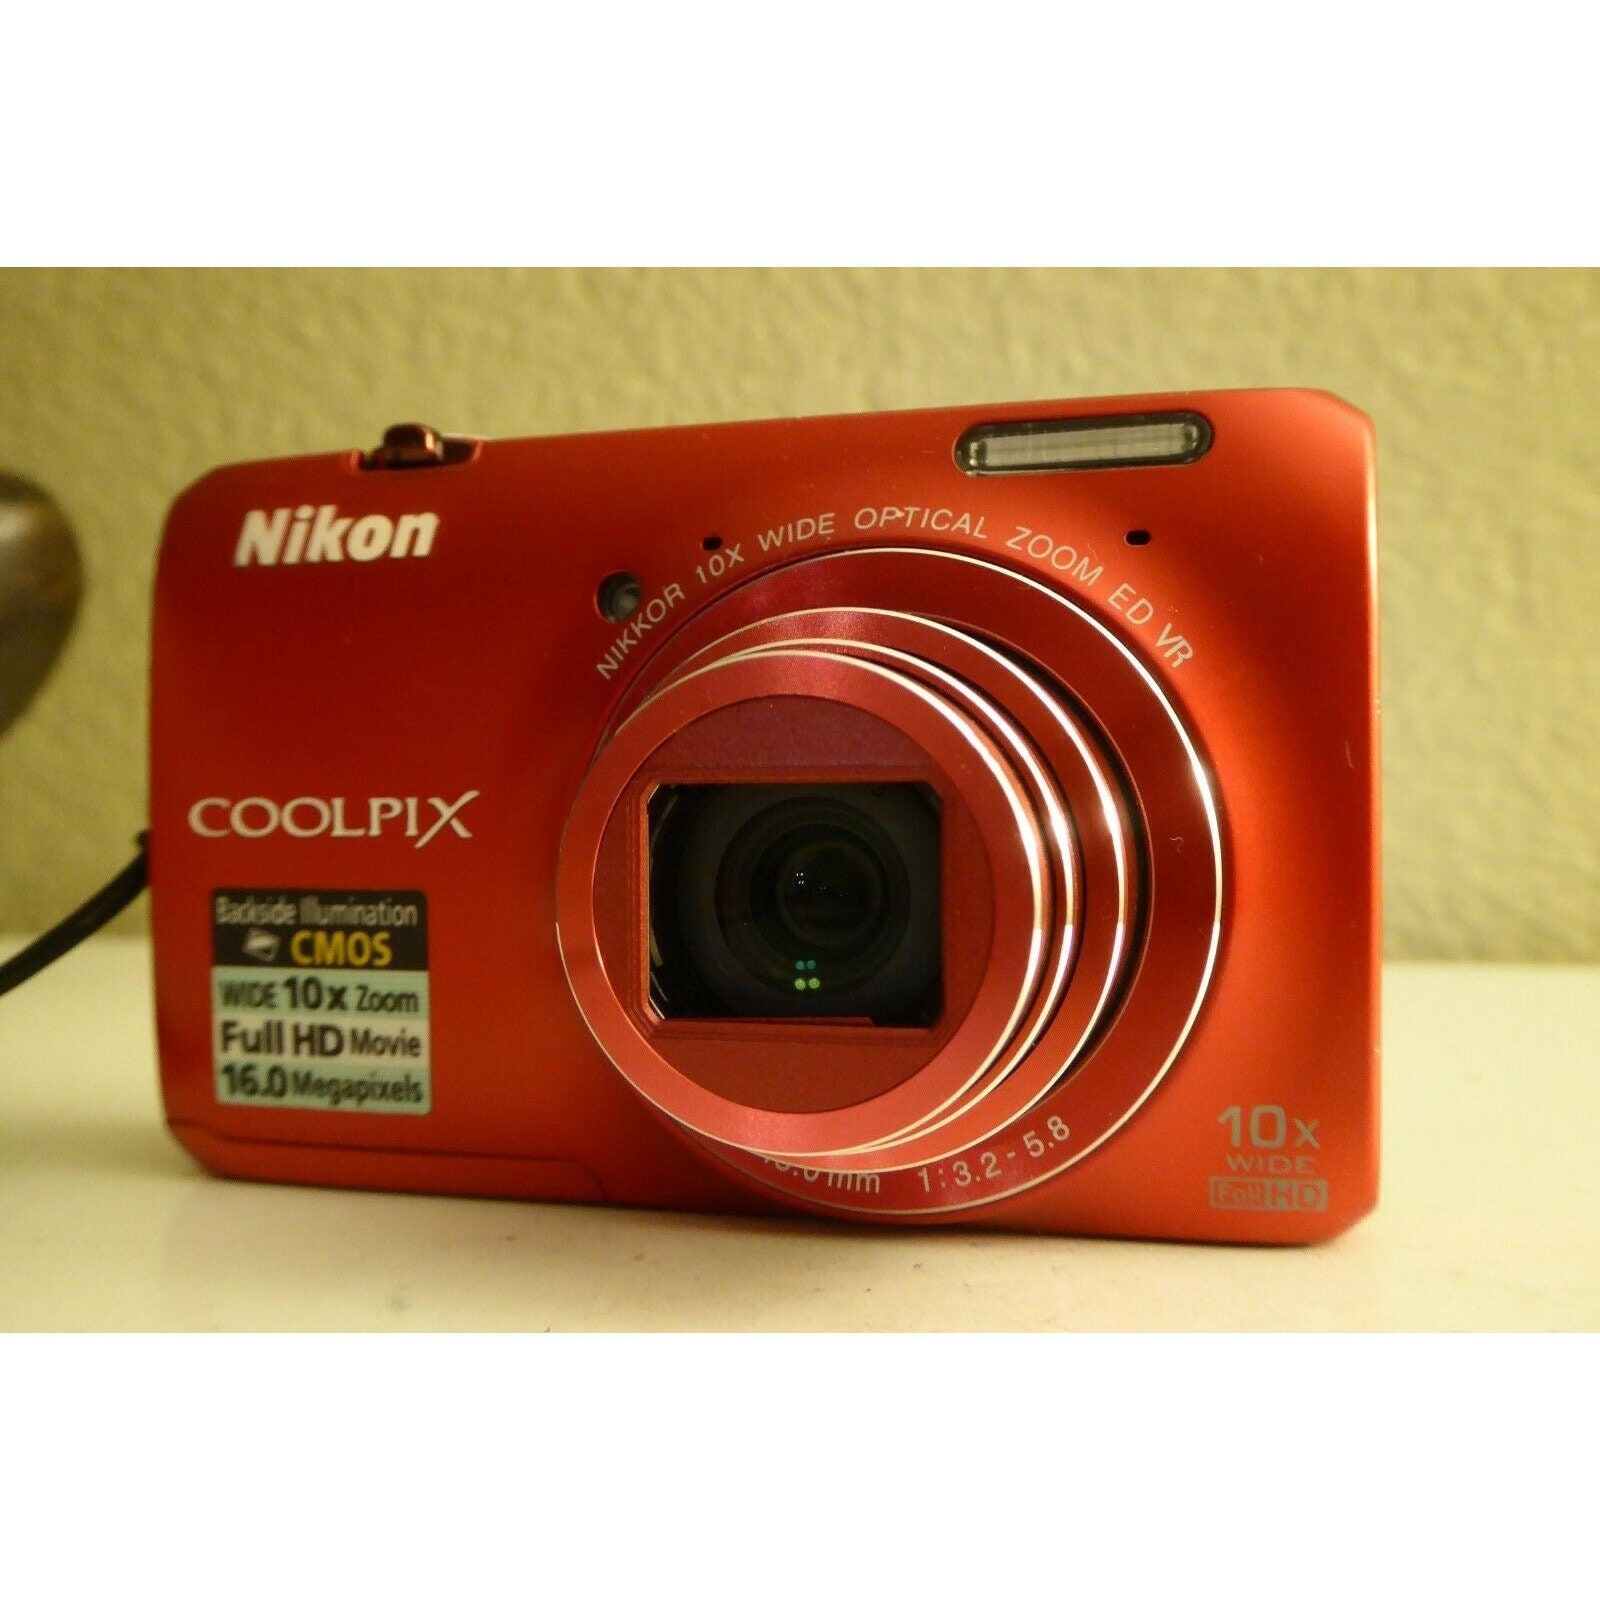 Nikon coolpix S6300